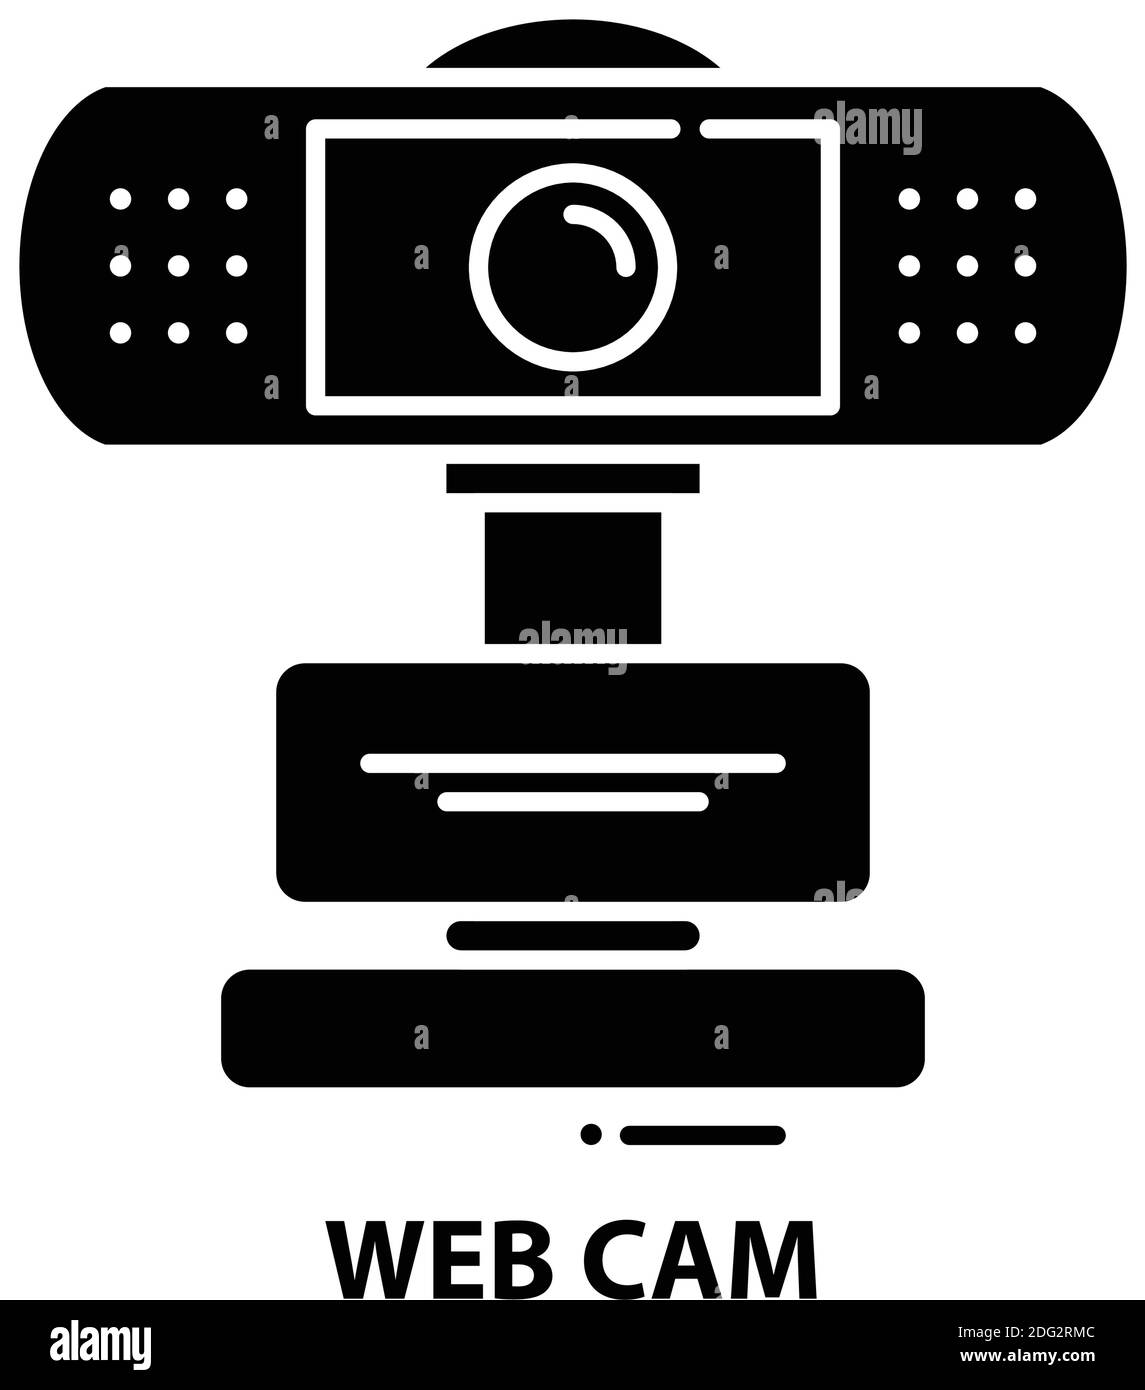 web cam icon, black vector sign with editable strokes, concept illustration Stock Vector